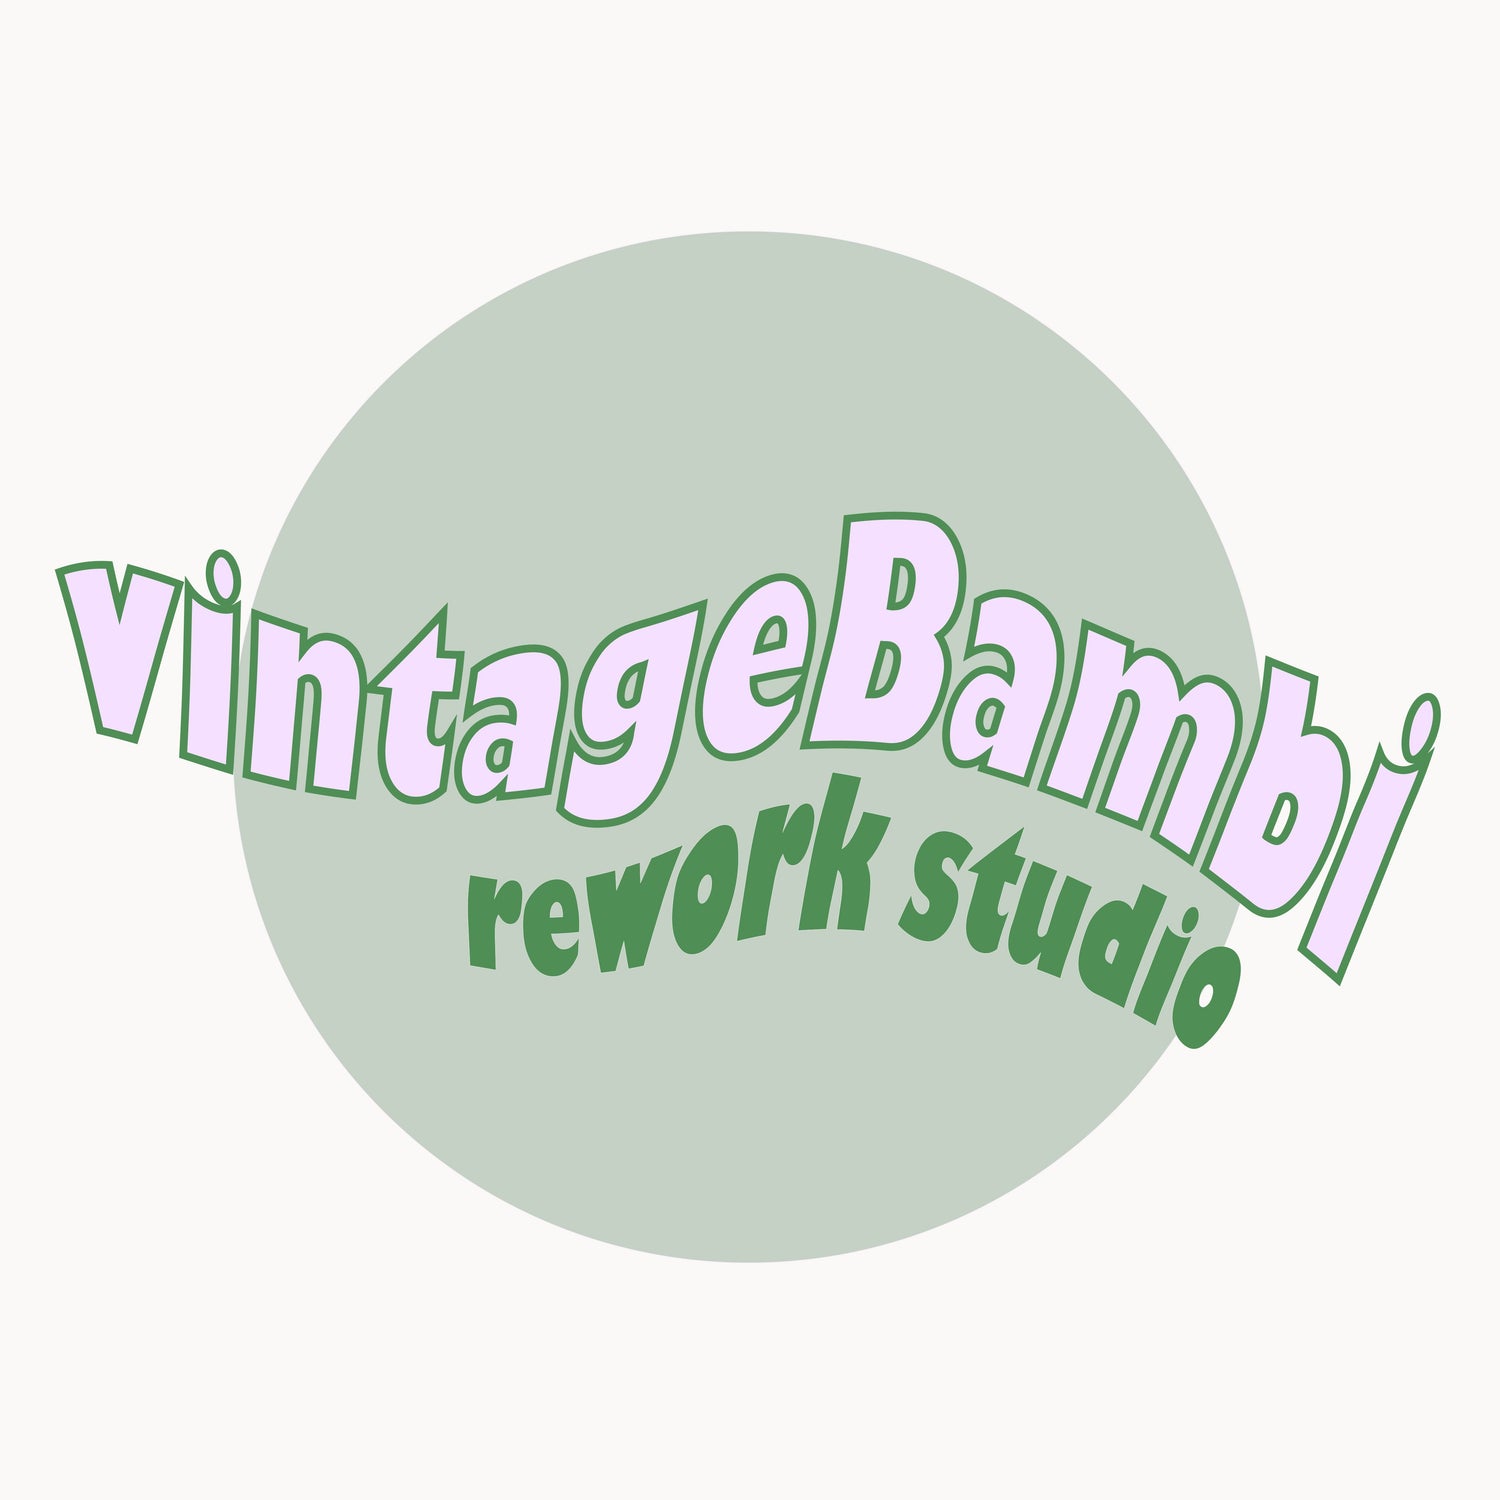 vintageBambi rework studio & vintage store